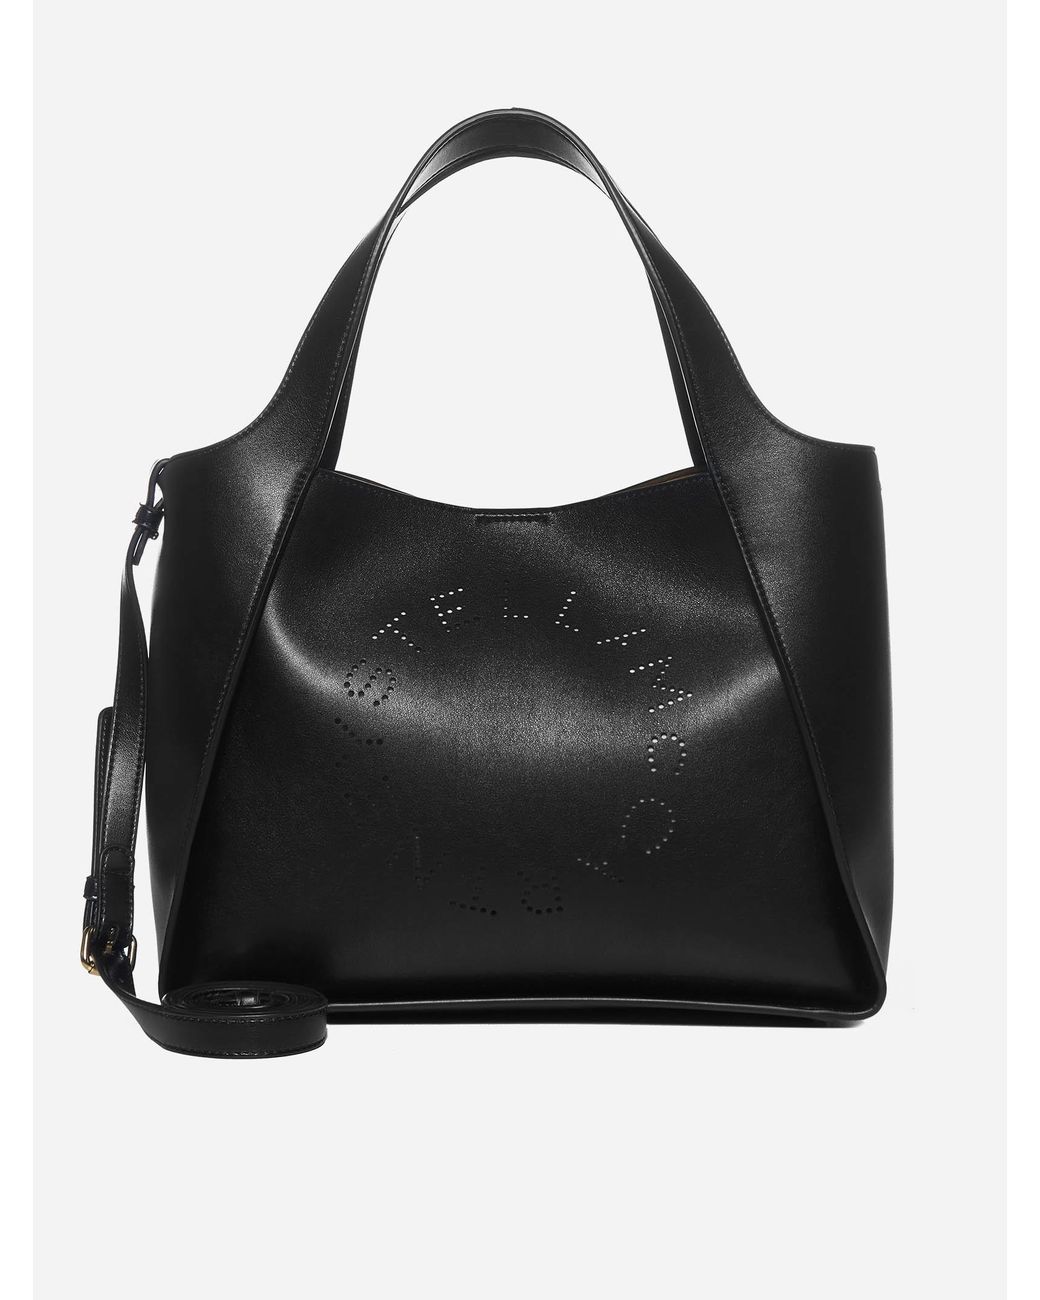 Stella McCartney Logo Vegan Leather Bag in Black | Lyst